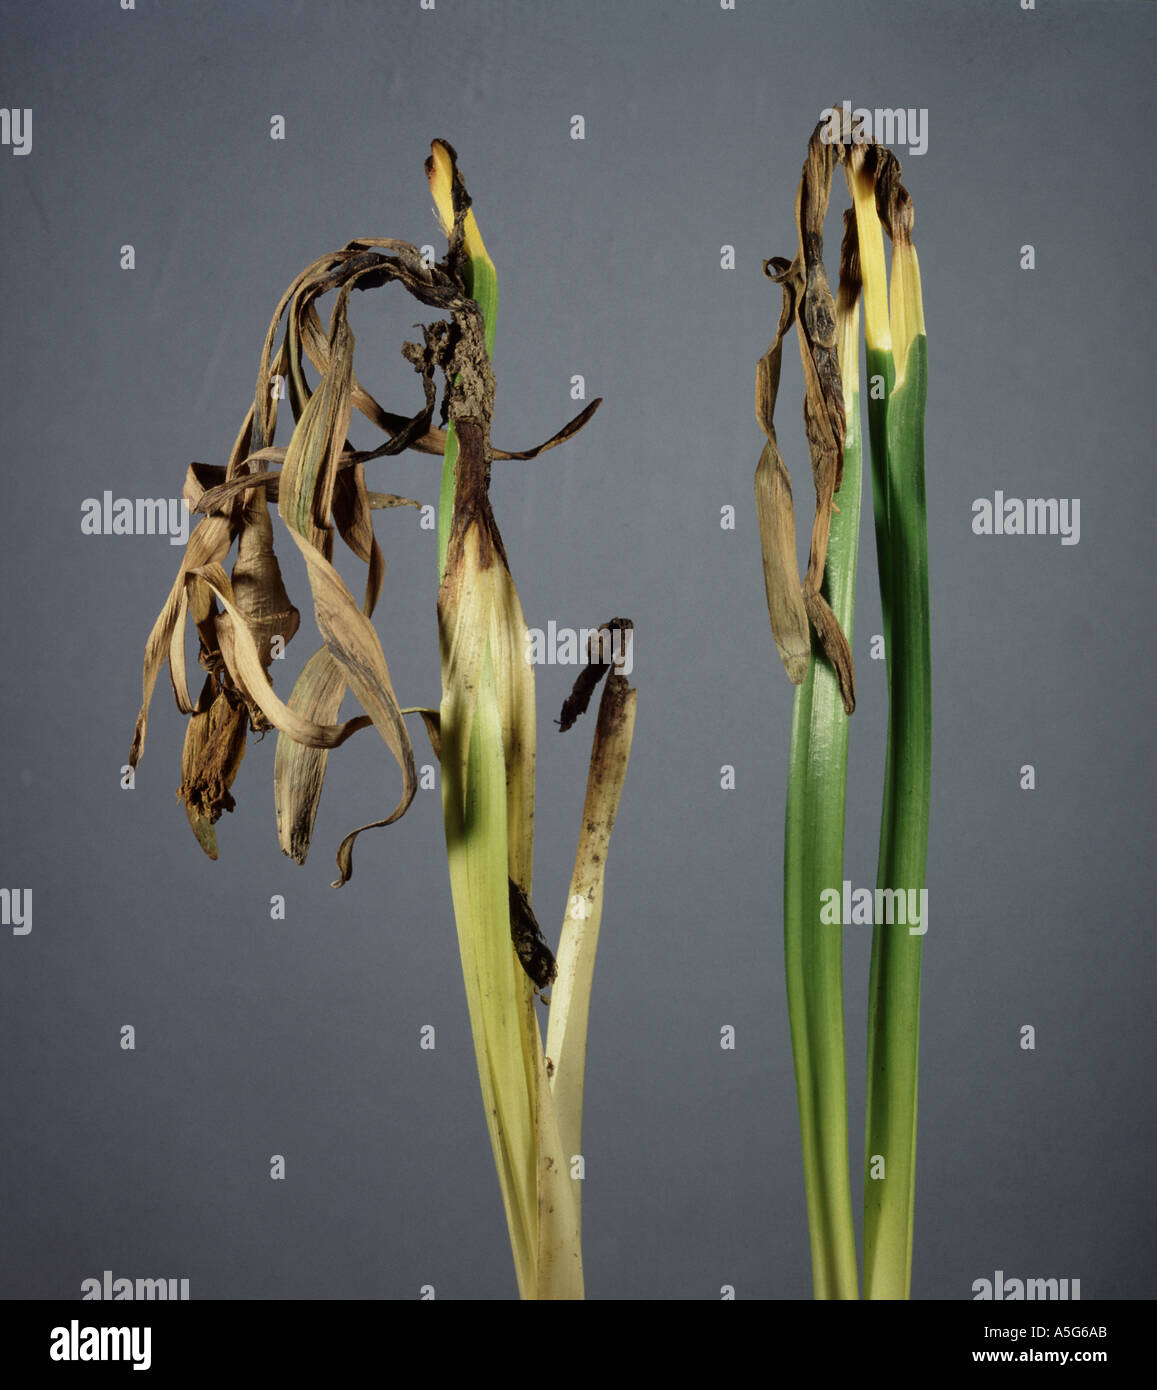 Scottatura foglia Stagonospora curtisii danni ai fiori di narciso e gemme Foto Stock